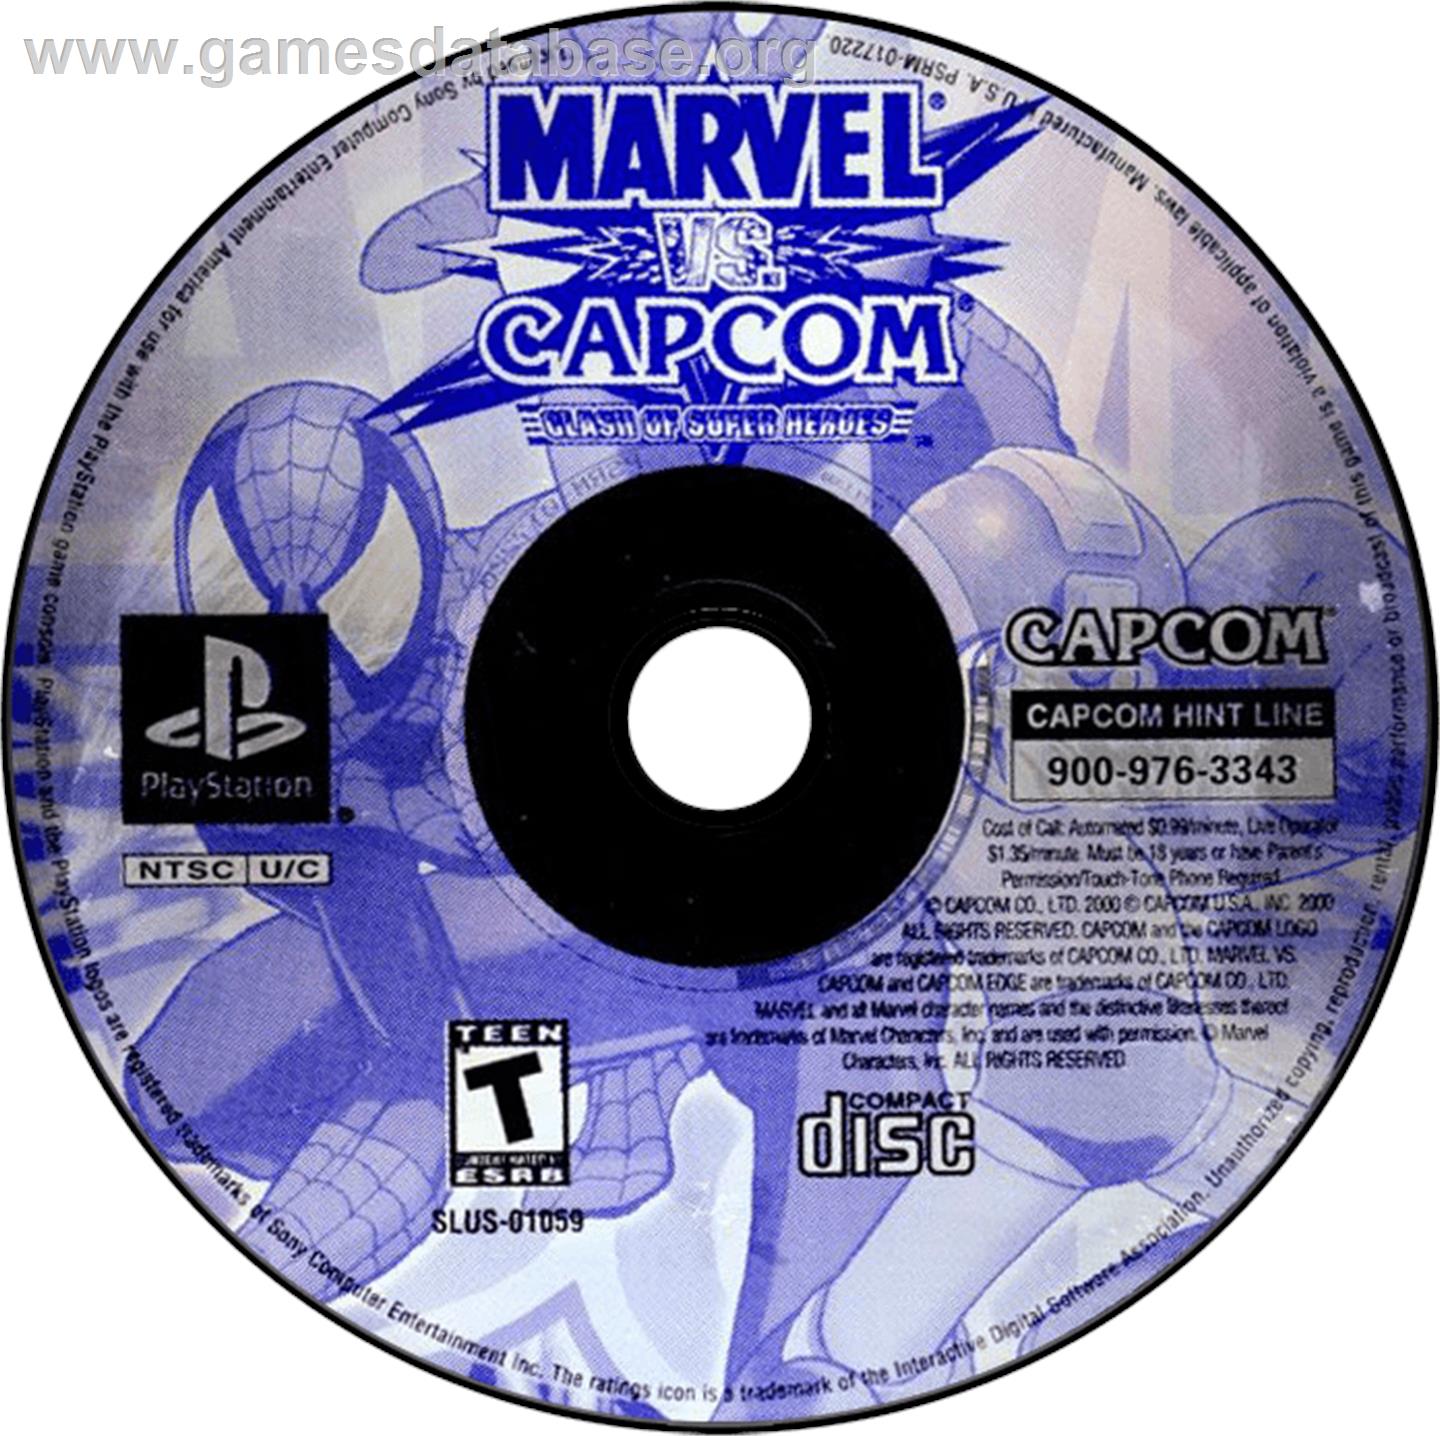 Marvel vs. Capcom: Clash of Super Heroes - Sony Playstation - Artwork - Disc